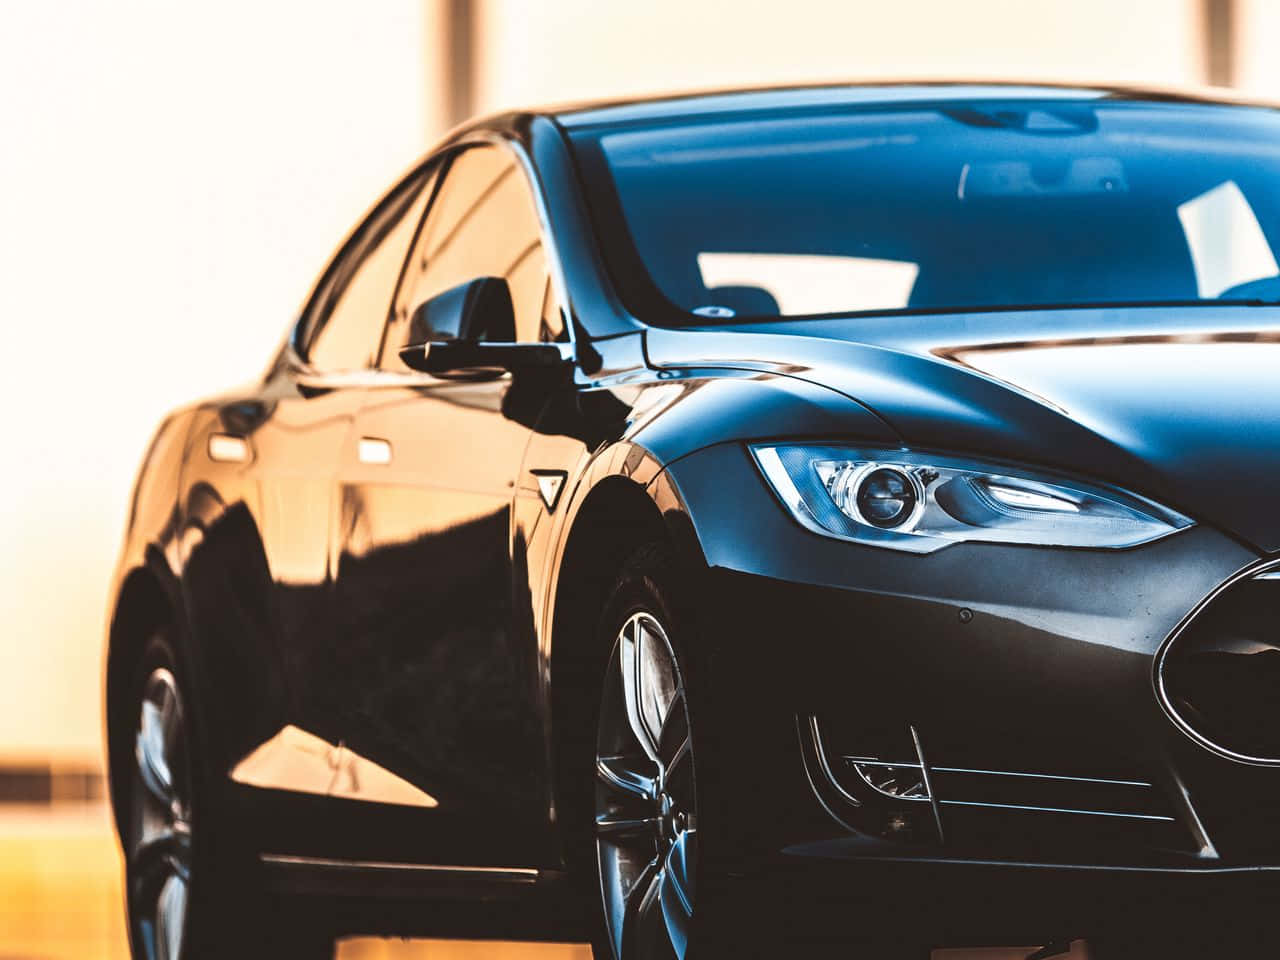 An awe inspiring view of Tesla's high-quality electric vehicles